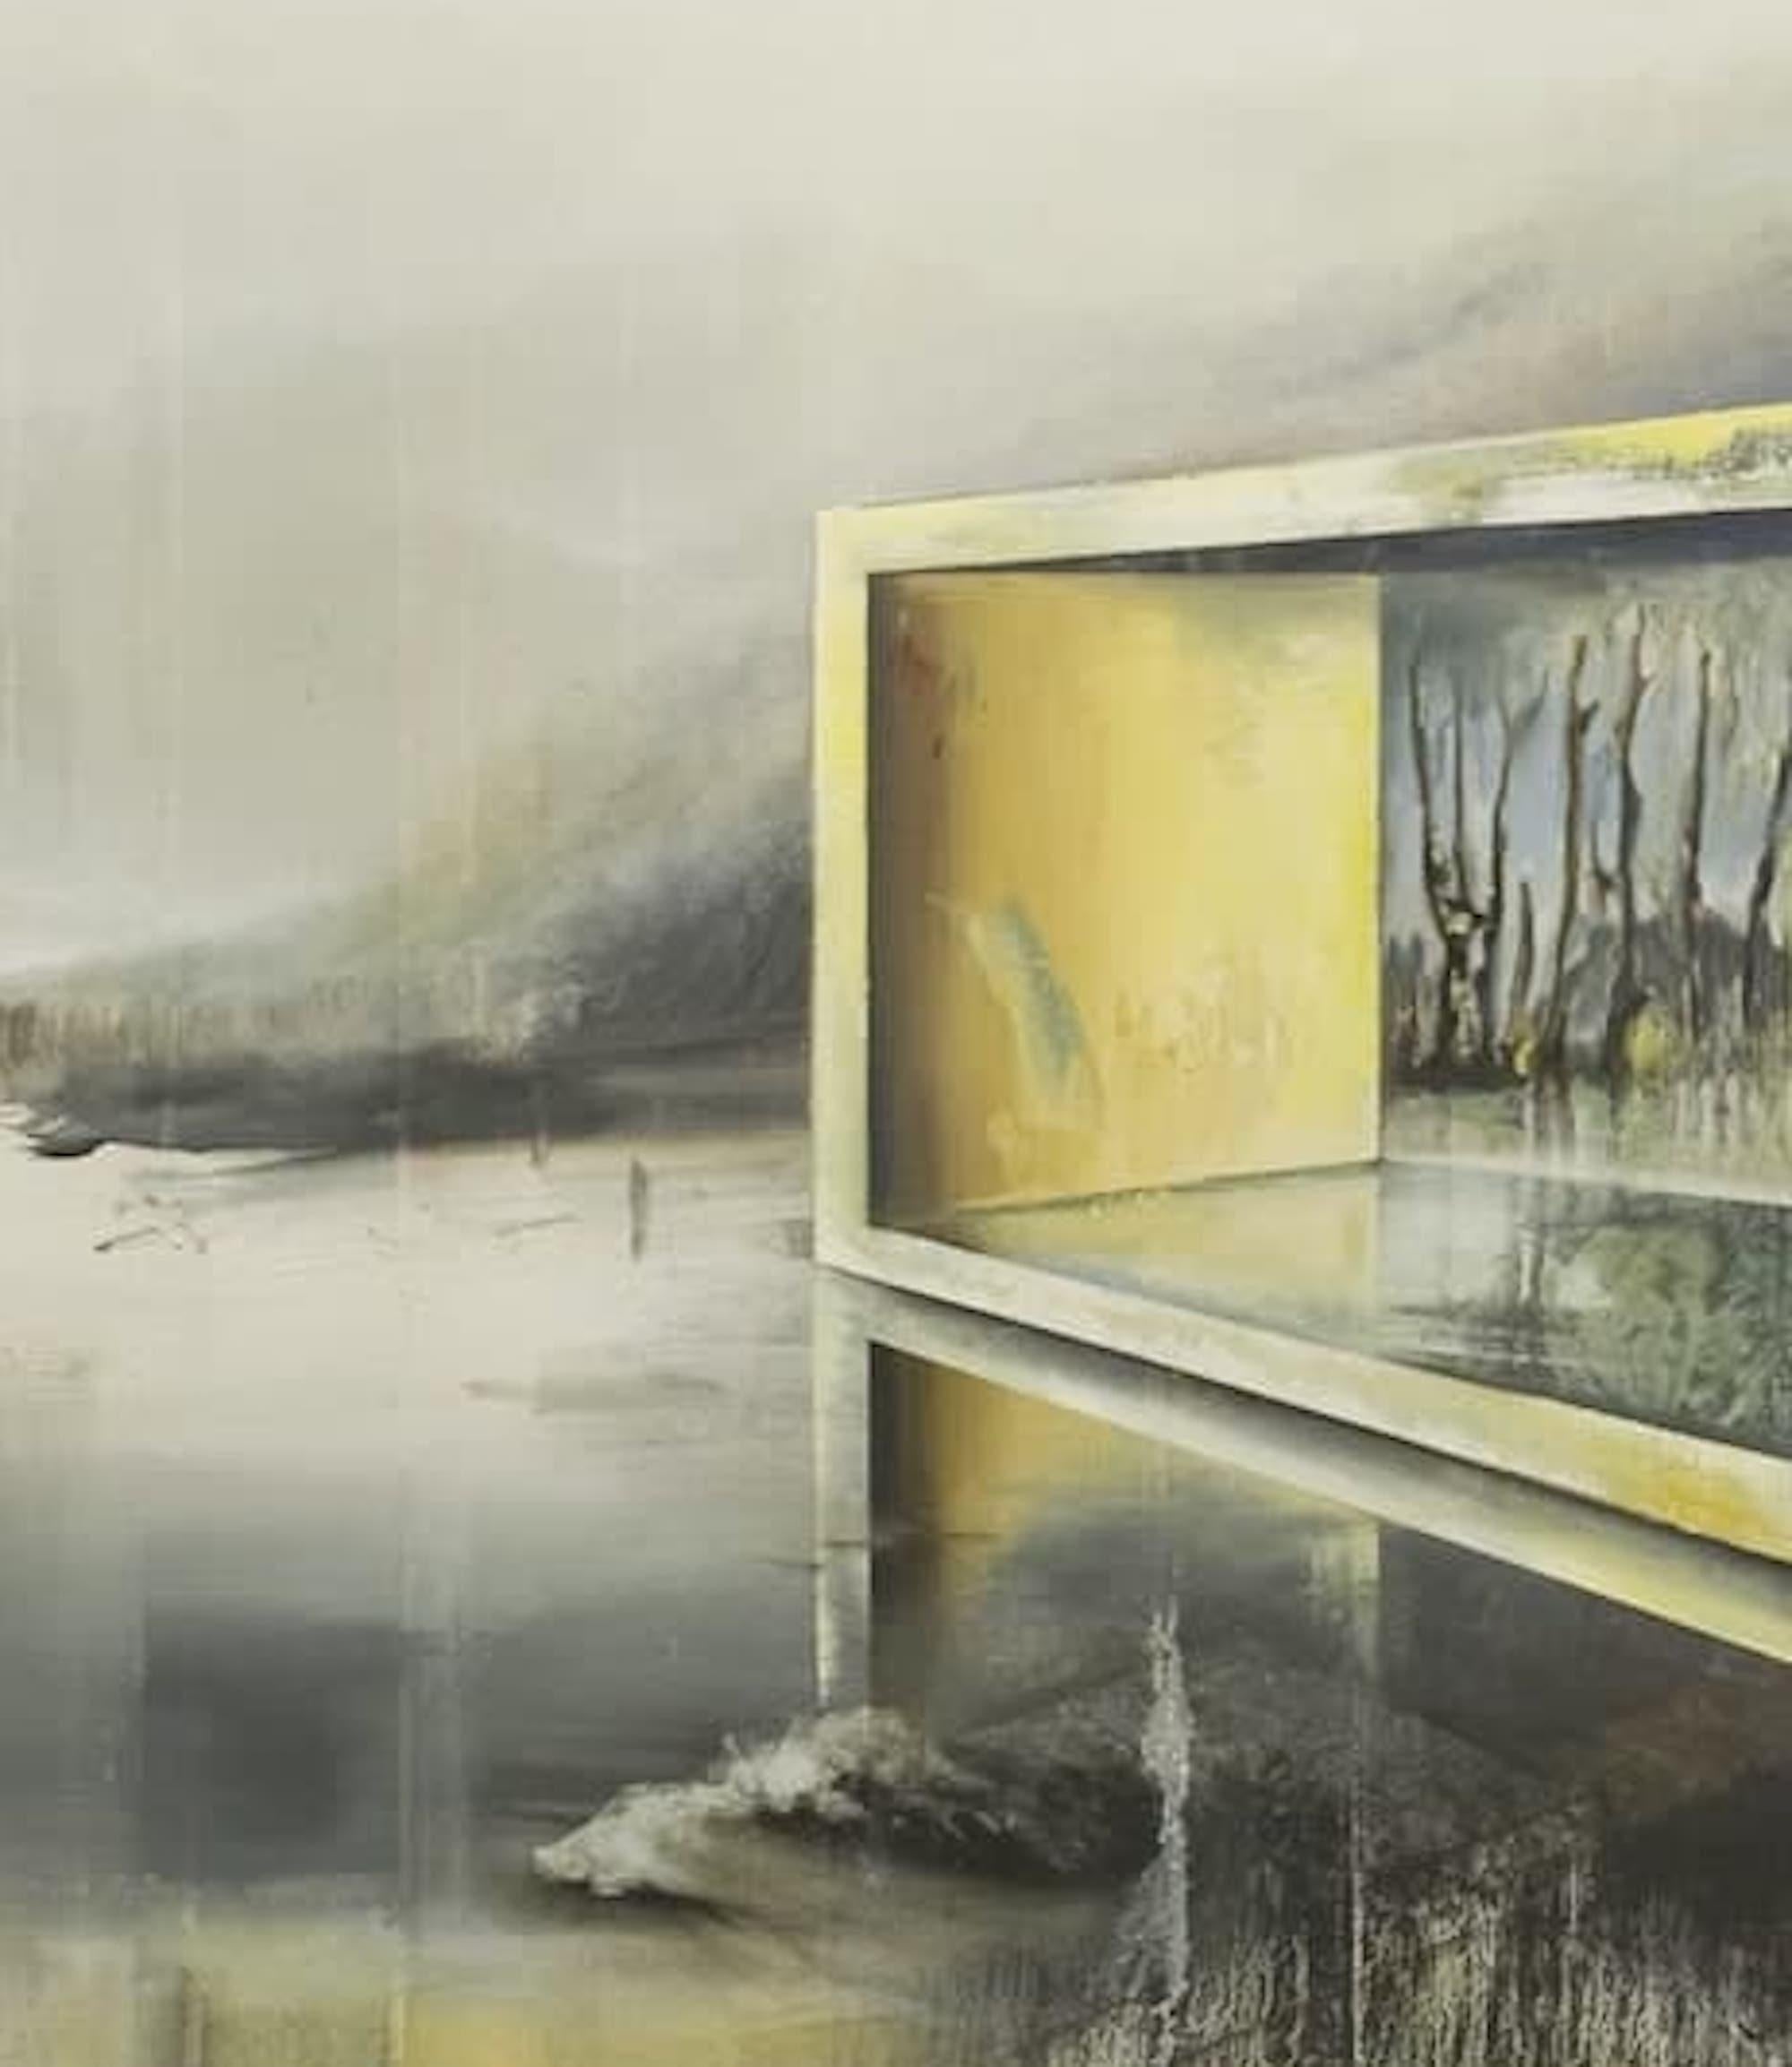 Wandelsgrund by Emanuel Schulze - Arquitectura y paisaje al óleo en venta 2